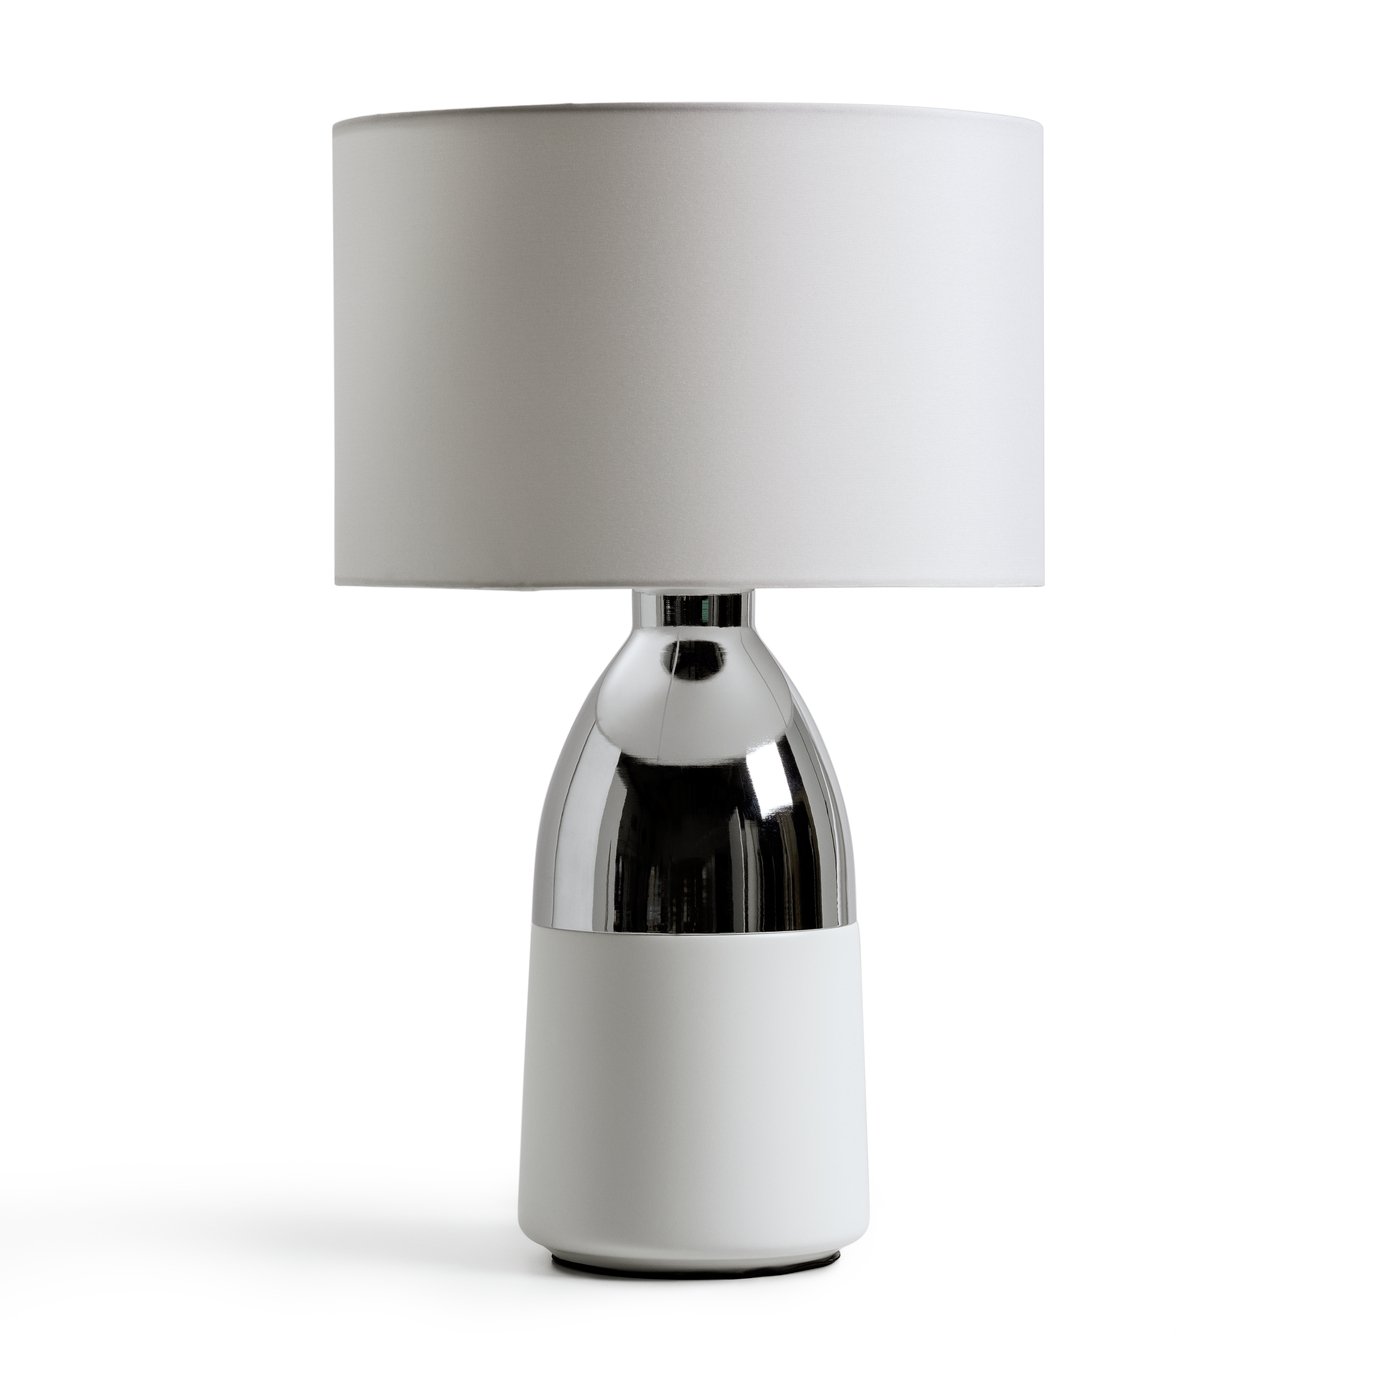 Chrome & White Argos Home Duno Touch Table Lamp 